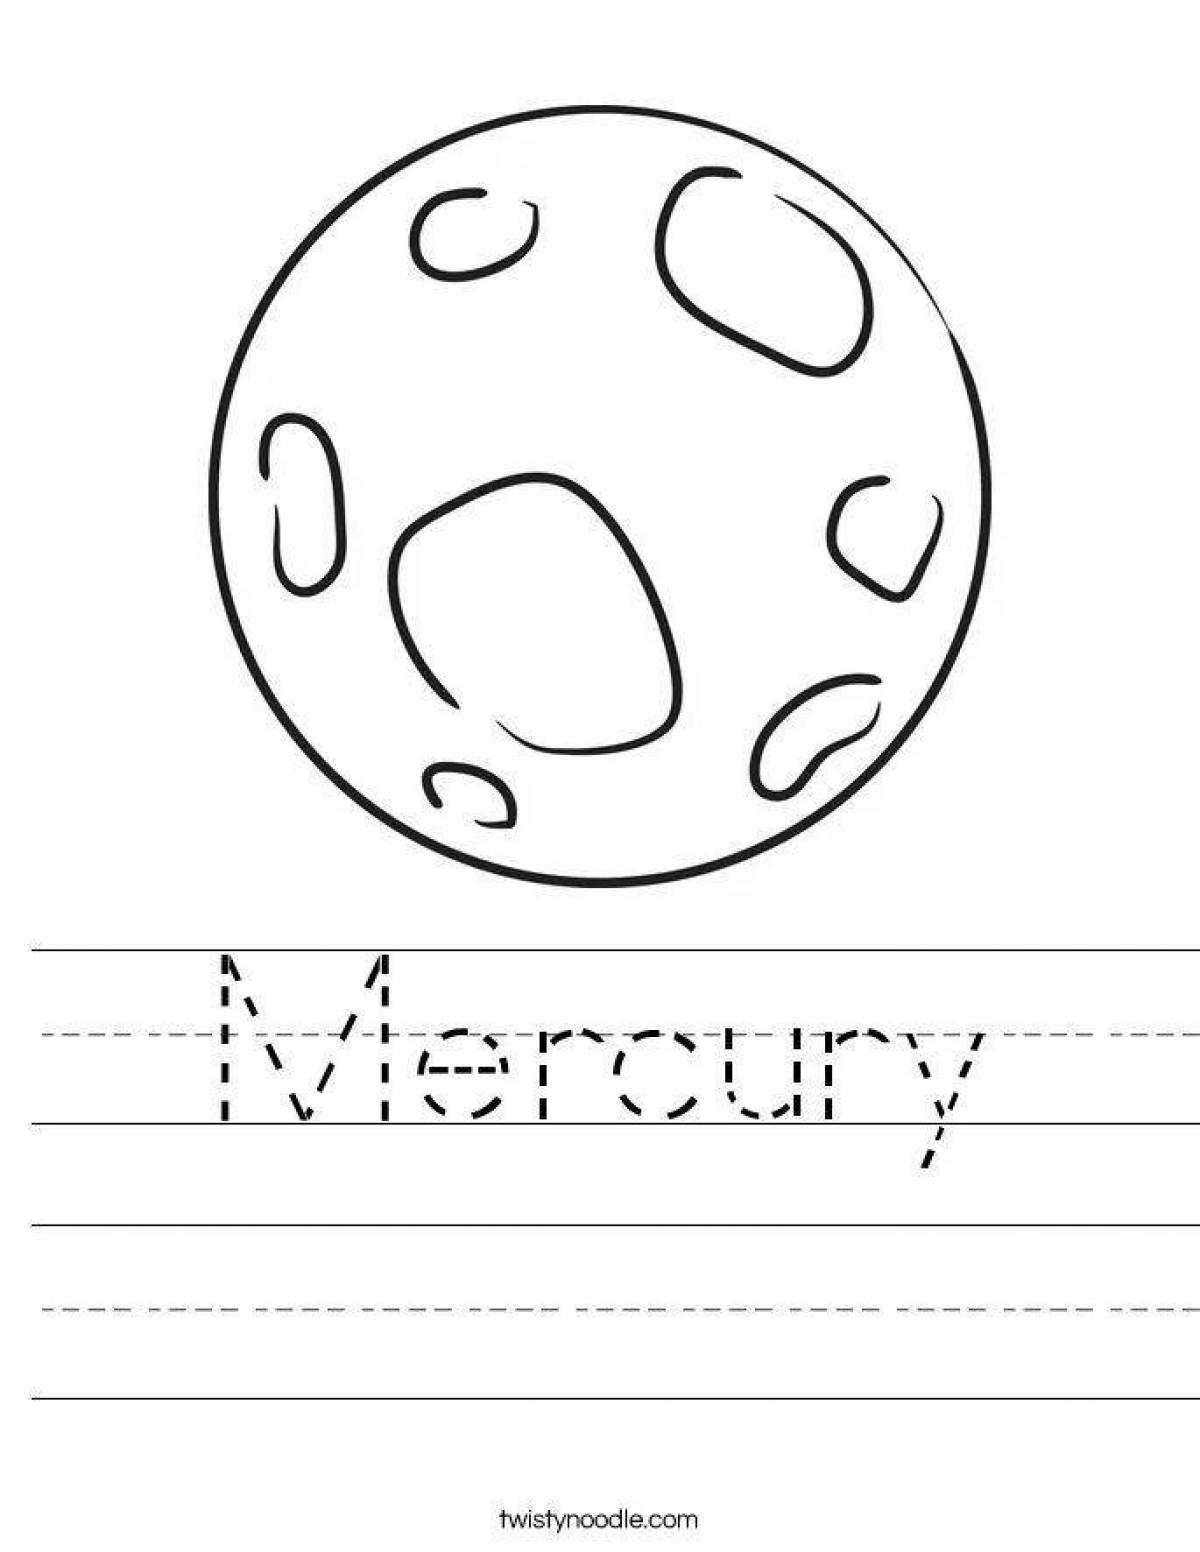 Меркурий шаблон